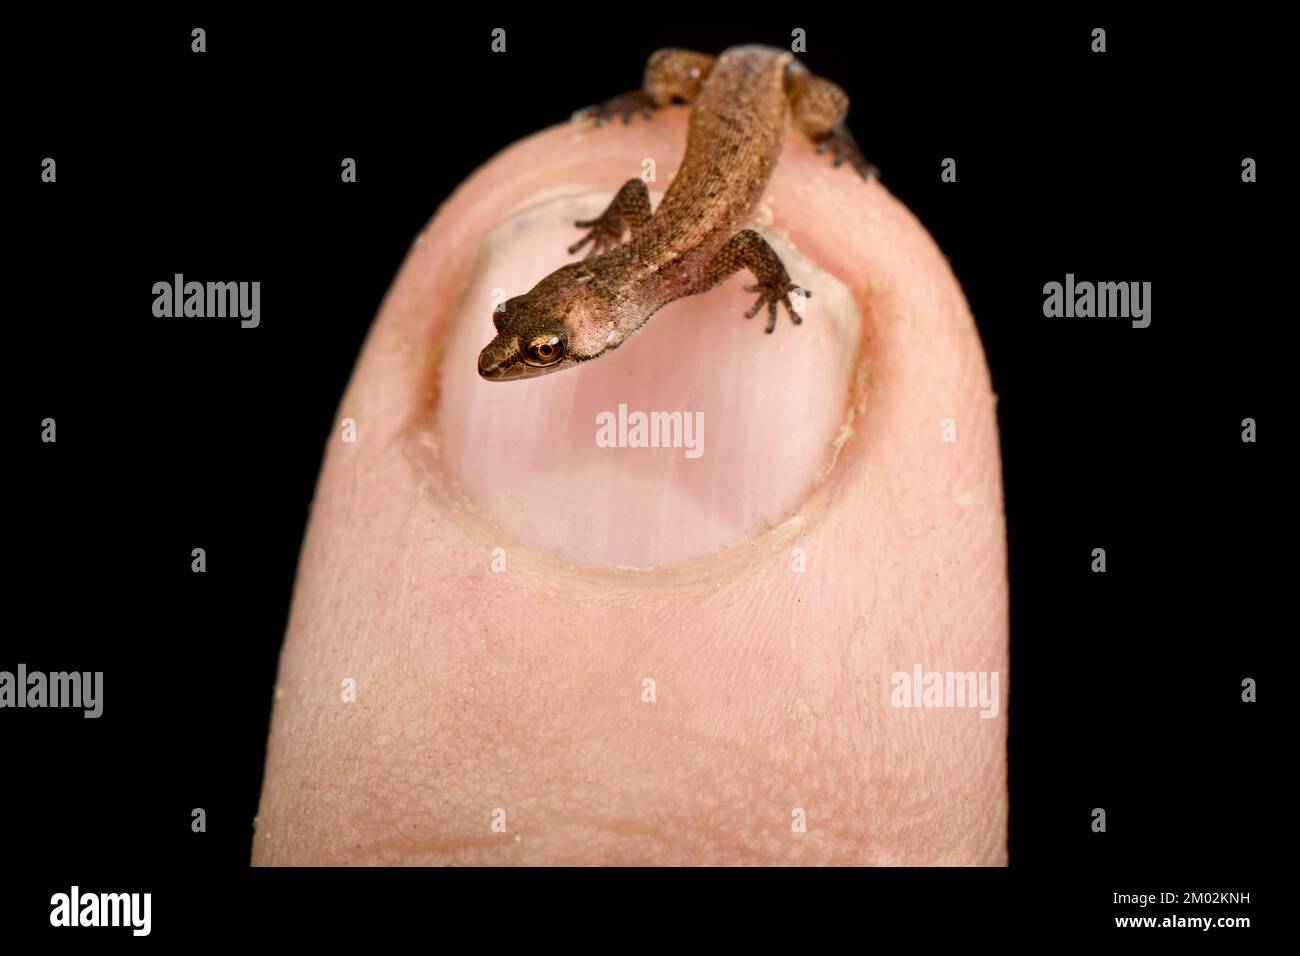 Amazonian dwarf gecko (Chatogekko amazonicus) Stock Photo